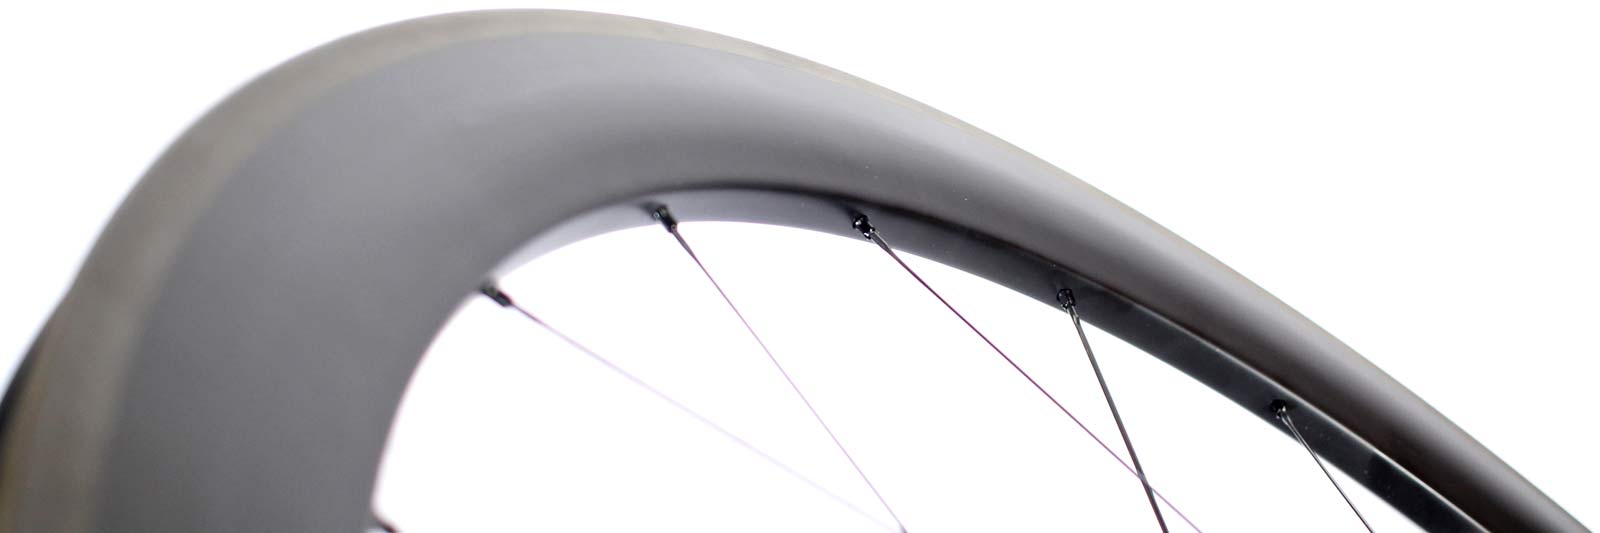 Mercury A-Series carbon road wheels Kamm Tail 10 aerodynamic road bike wheels, designed by Paul Lew aero guru A5